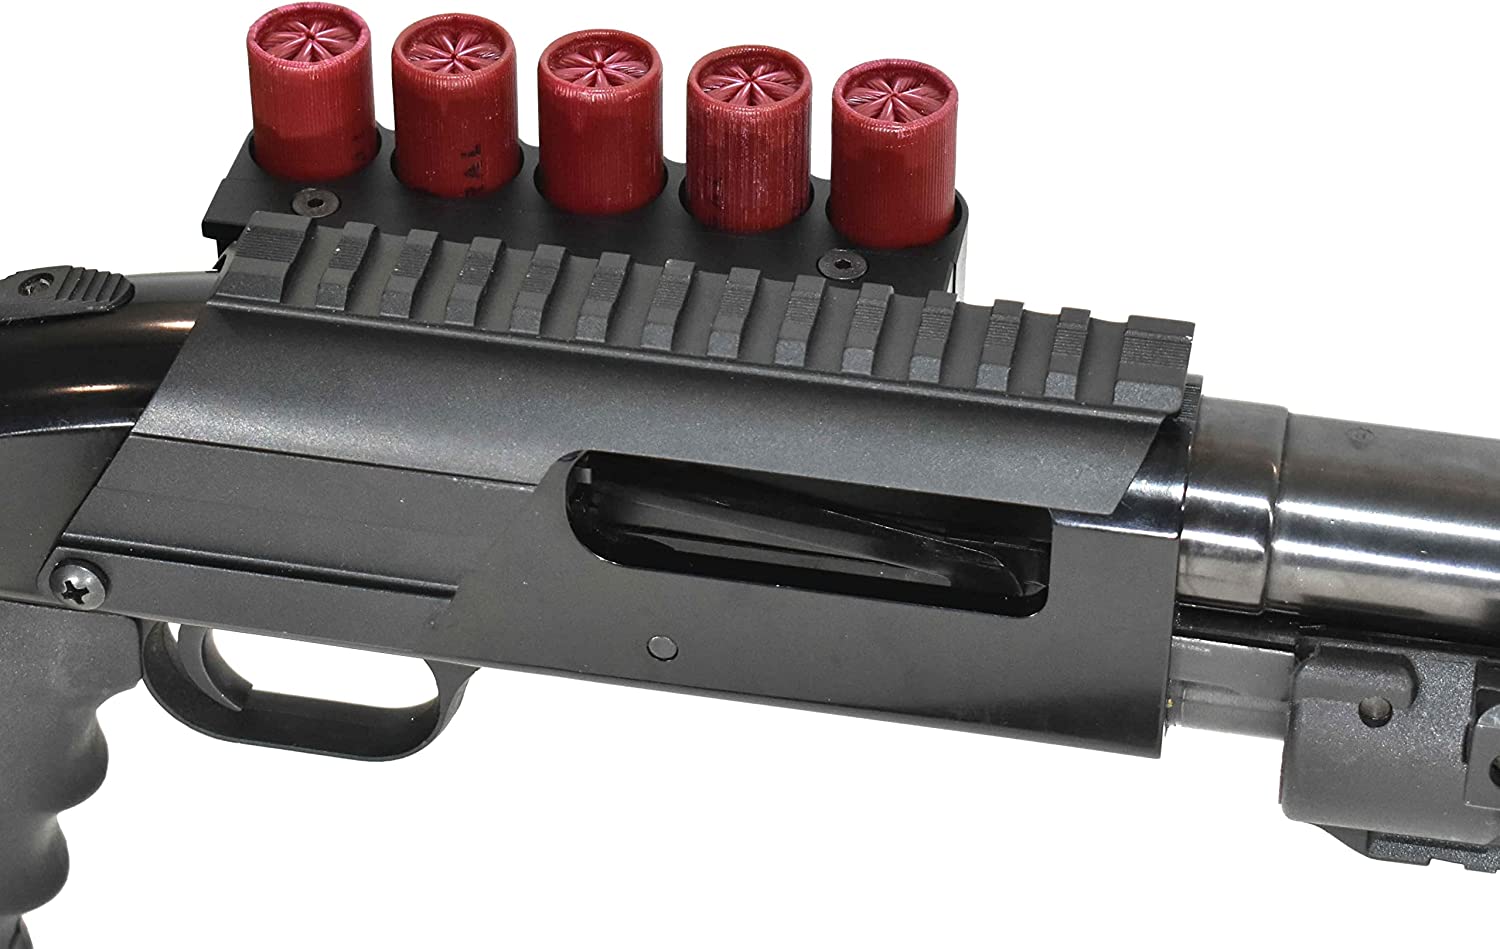 12 gauge shell holder replacement for shotguns.